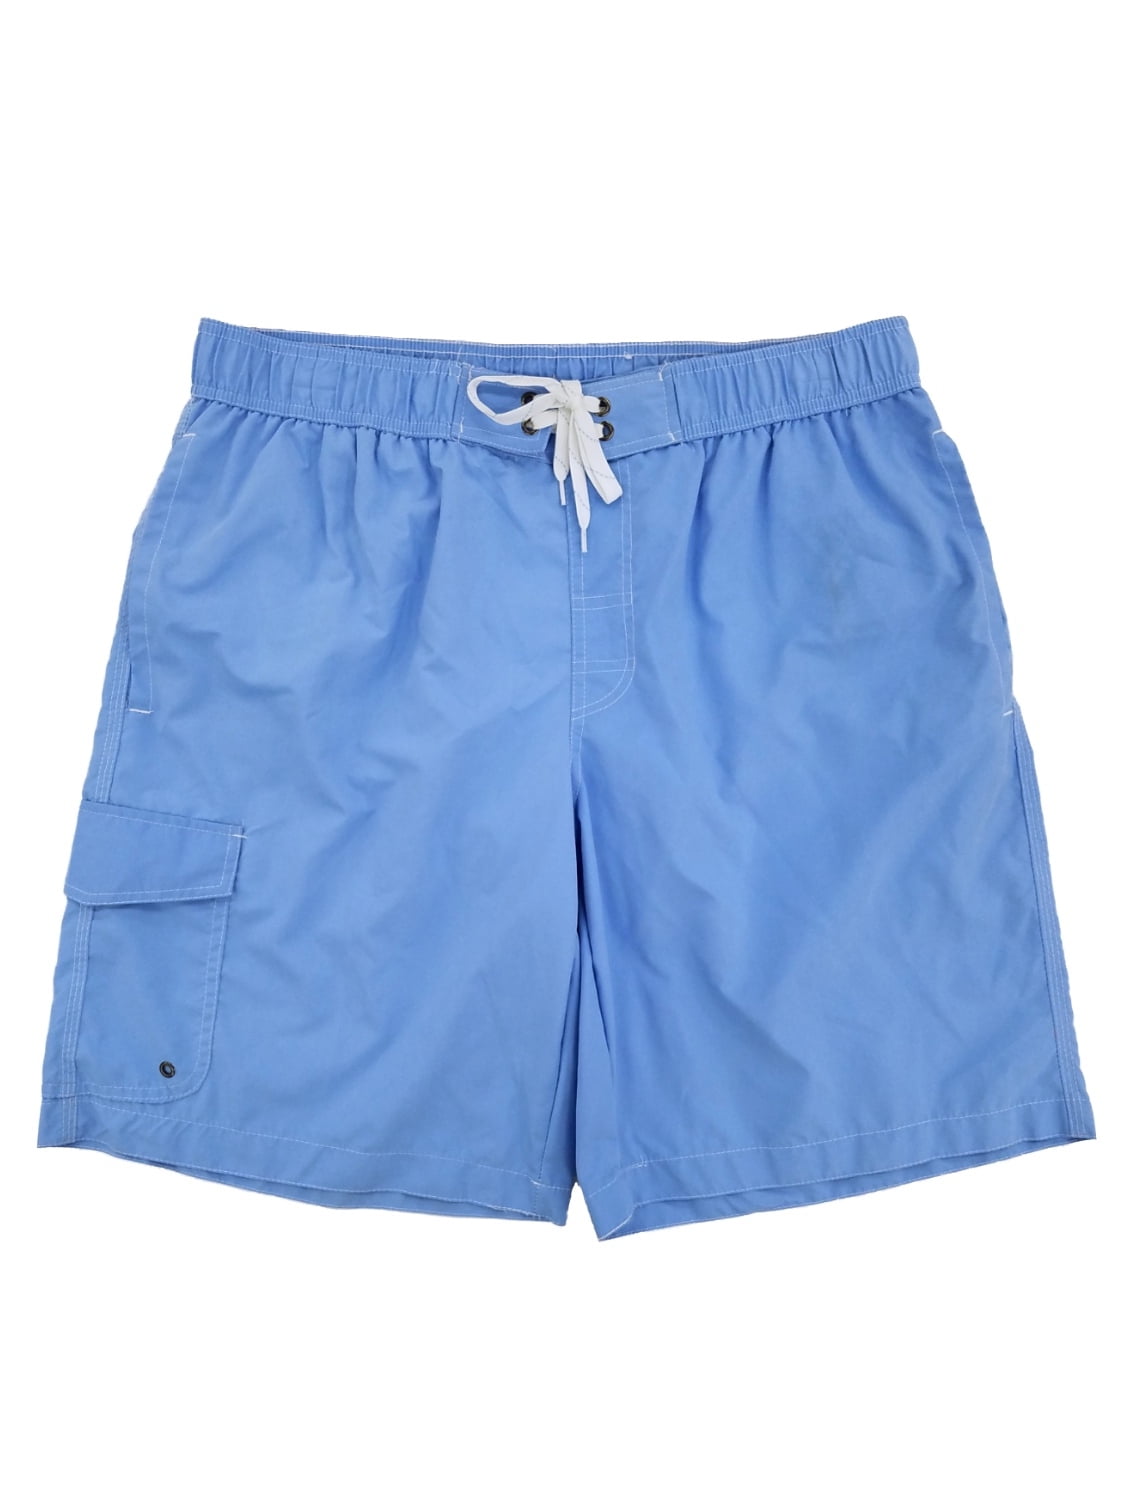 Mens Light Blue Cargo Swim Trunks Water Shorts Swim Shorts Board Shorts ...